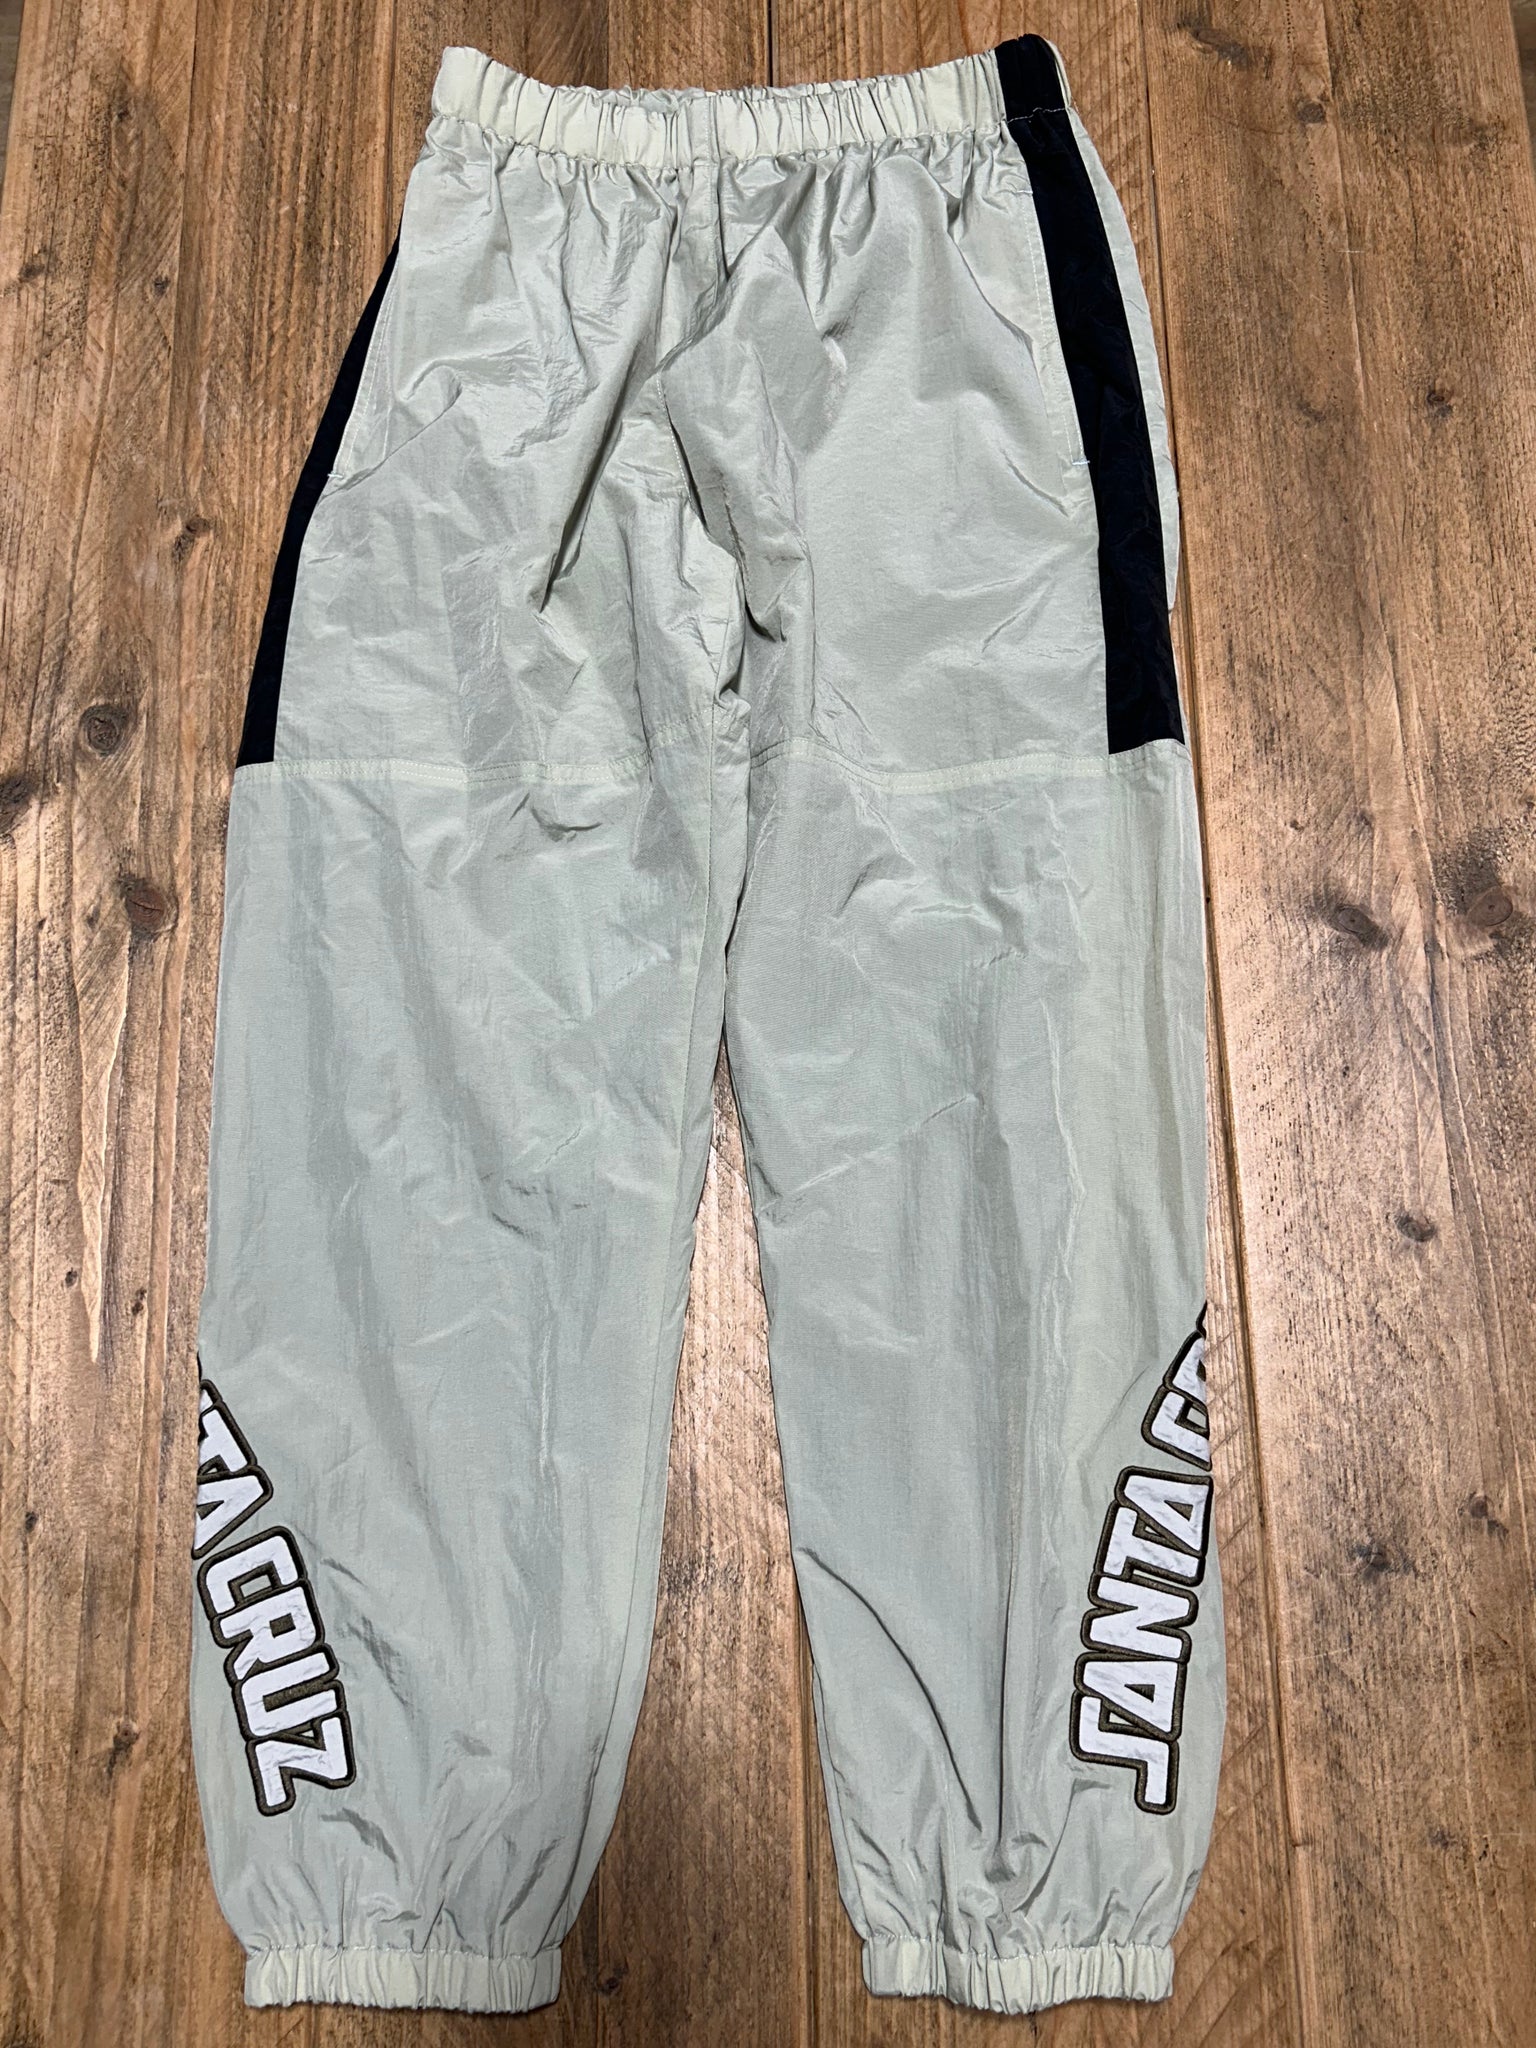 Santa Cruz Men’s Arch Strip Track Pant Grey Size M Sample 50% OFF!!!